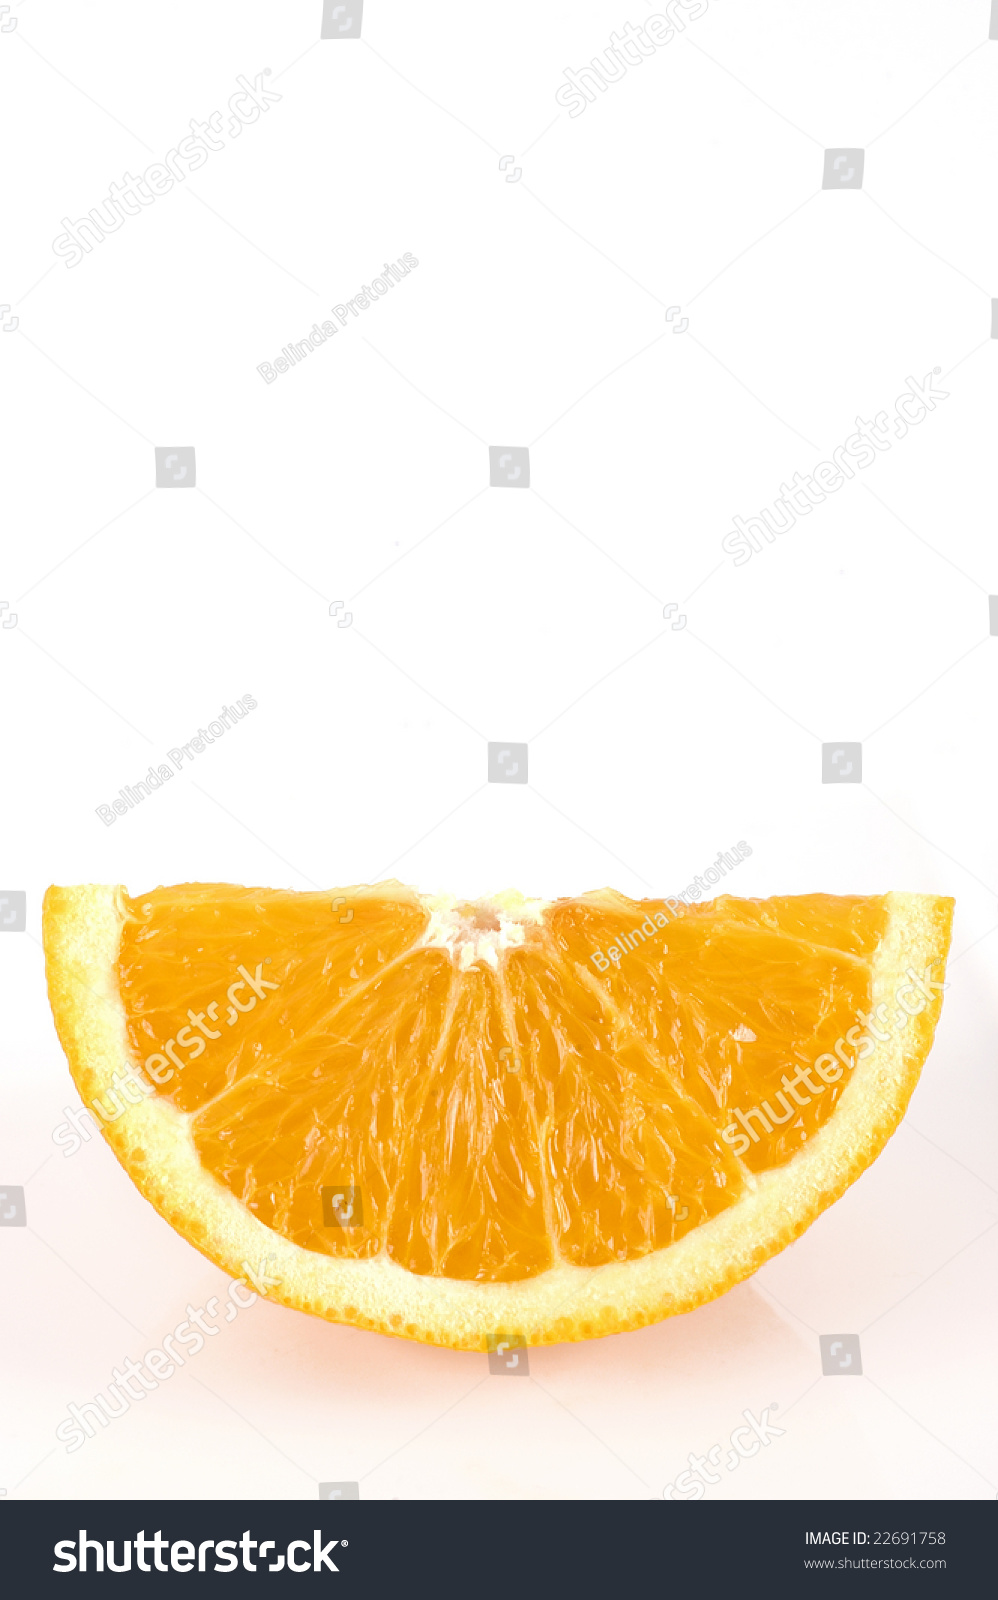 A Quarter Of An Orange On A White Background Stock Photo 22691758 ...